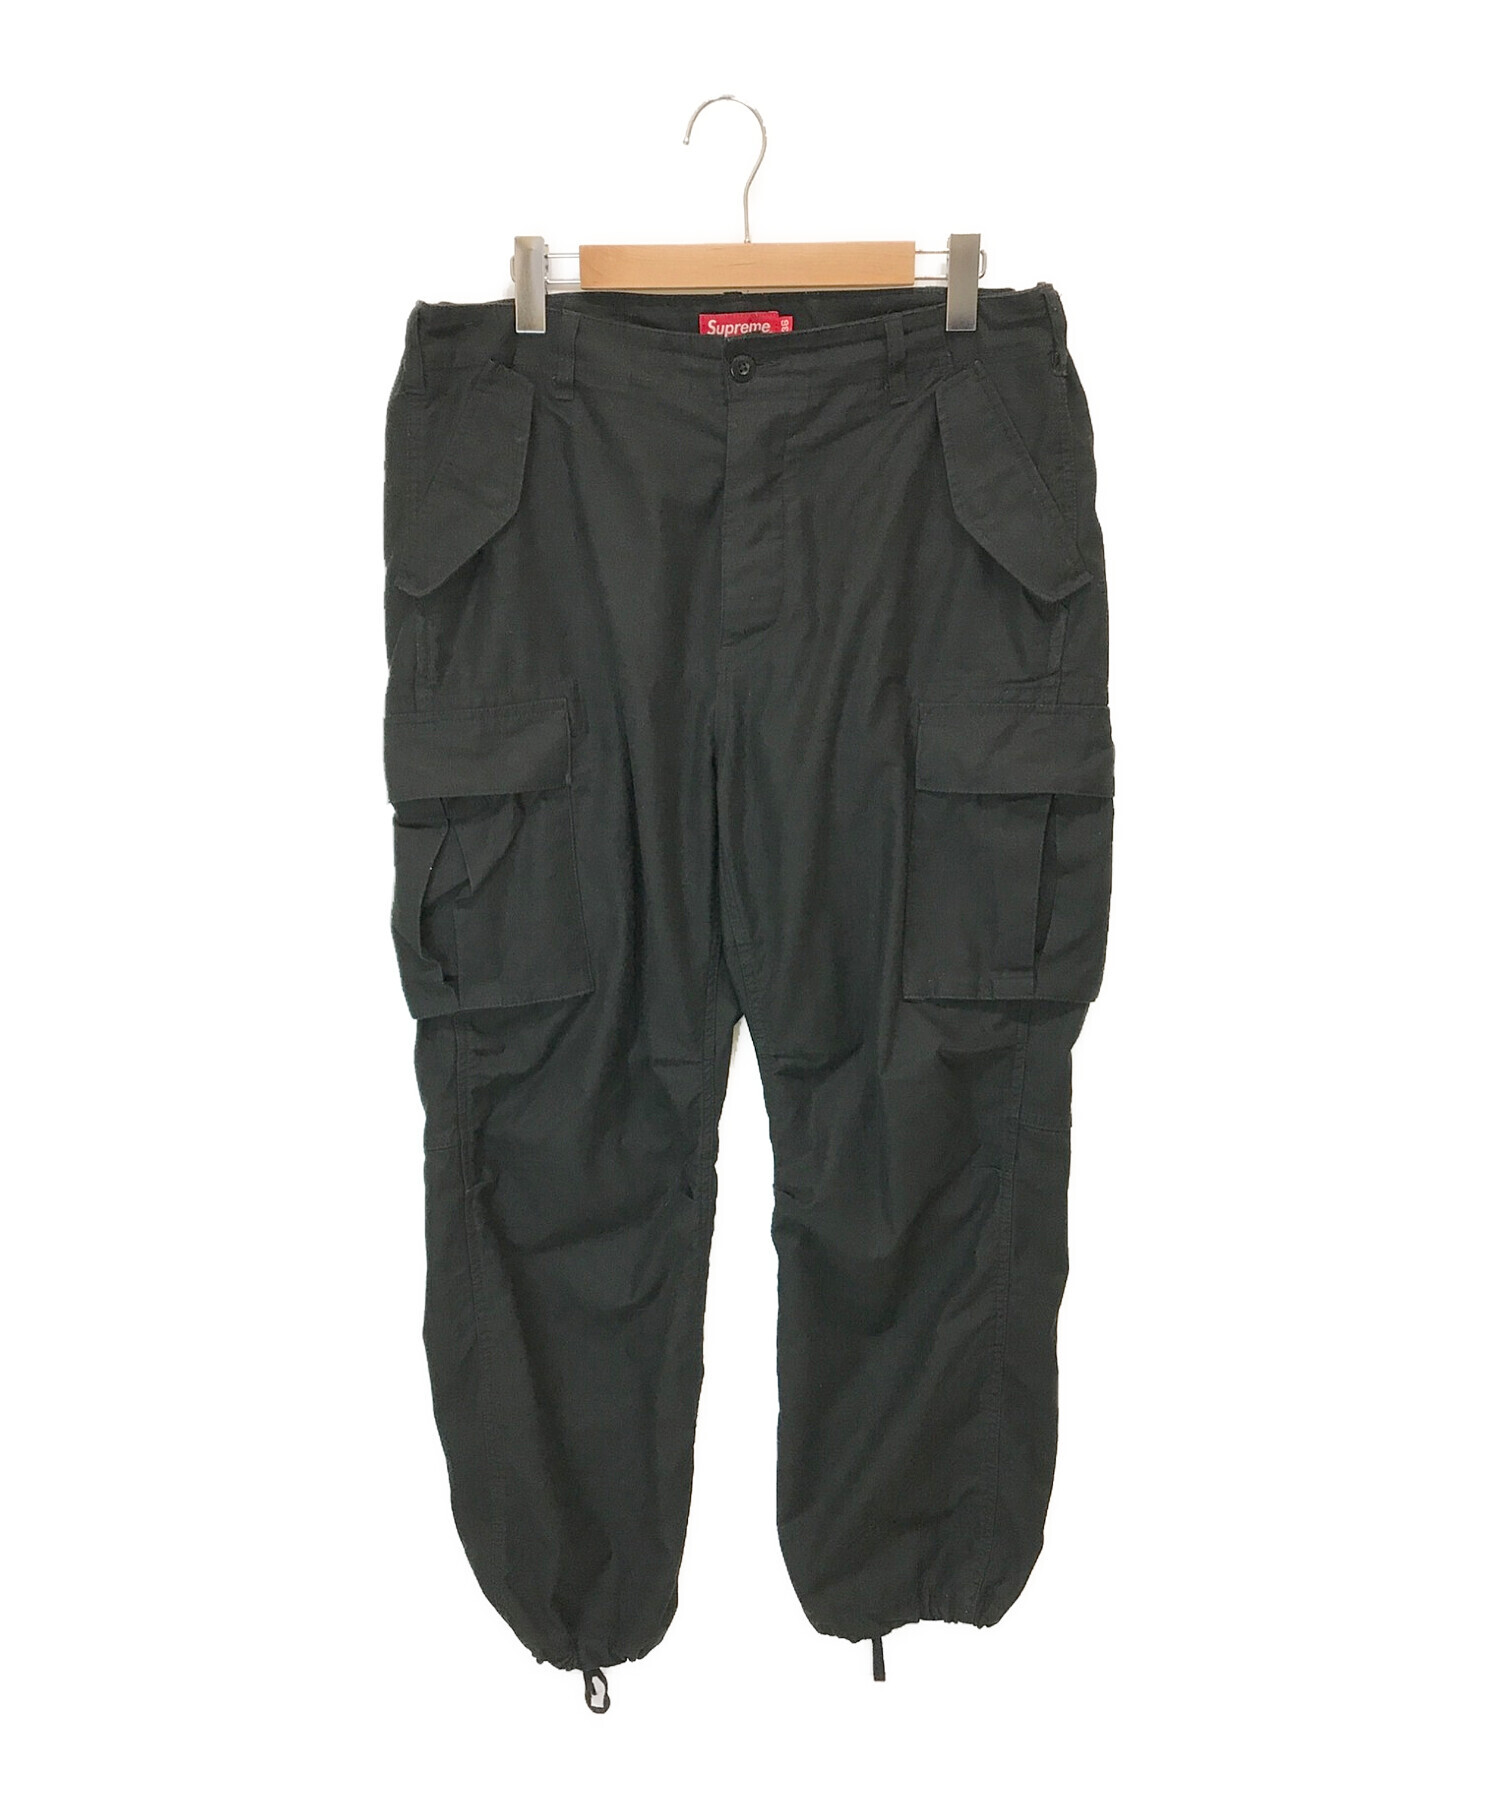 supreme cargo pants カーゴパンツ 36 ブラック | tradexautomotive.com